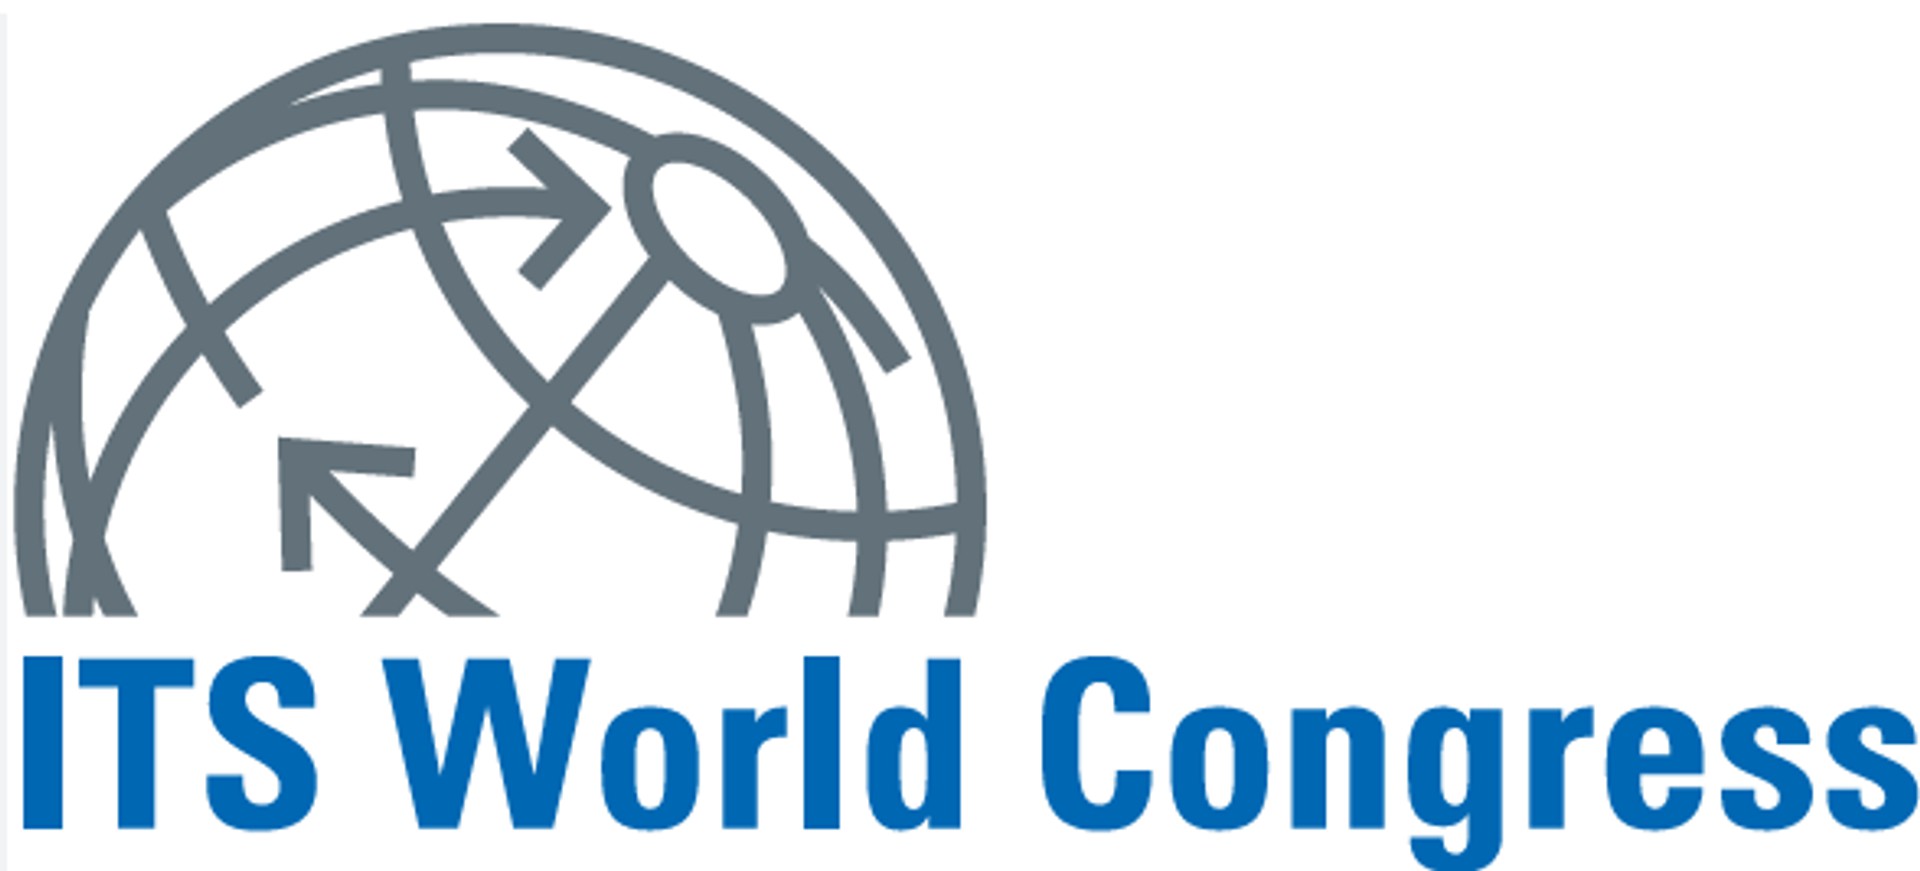 Its world congress